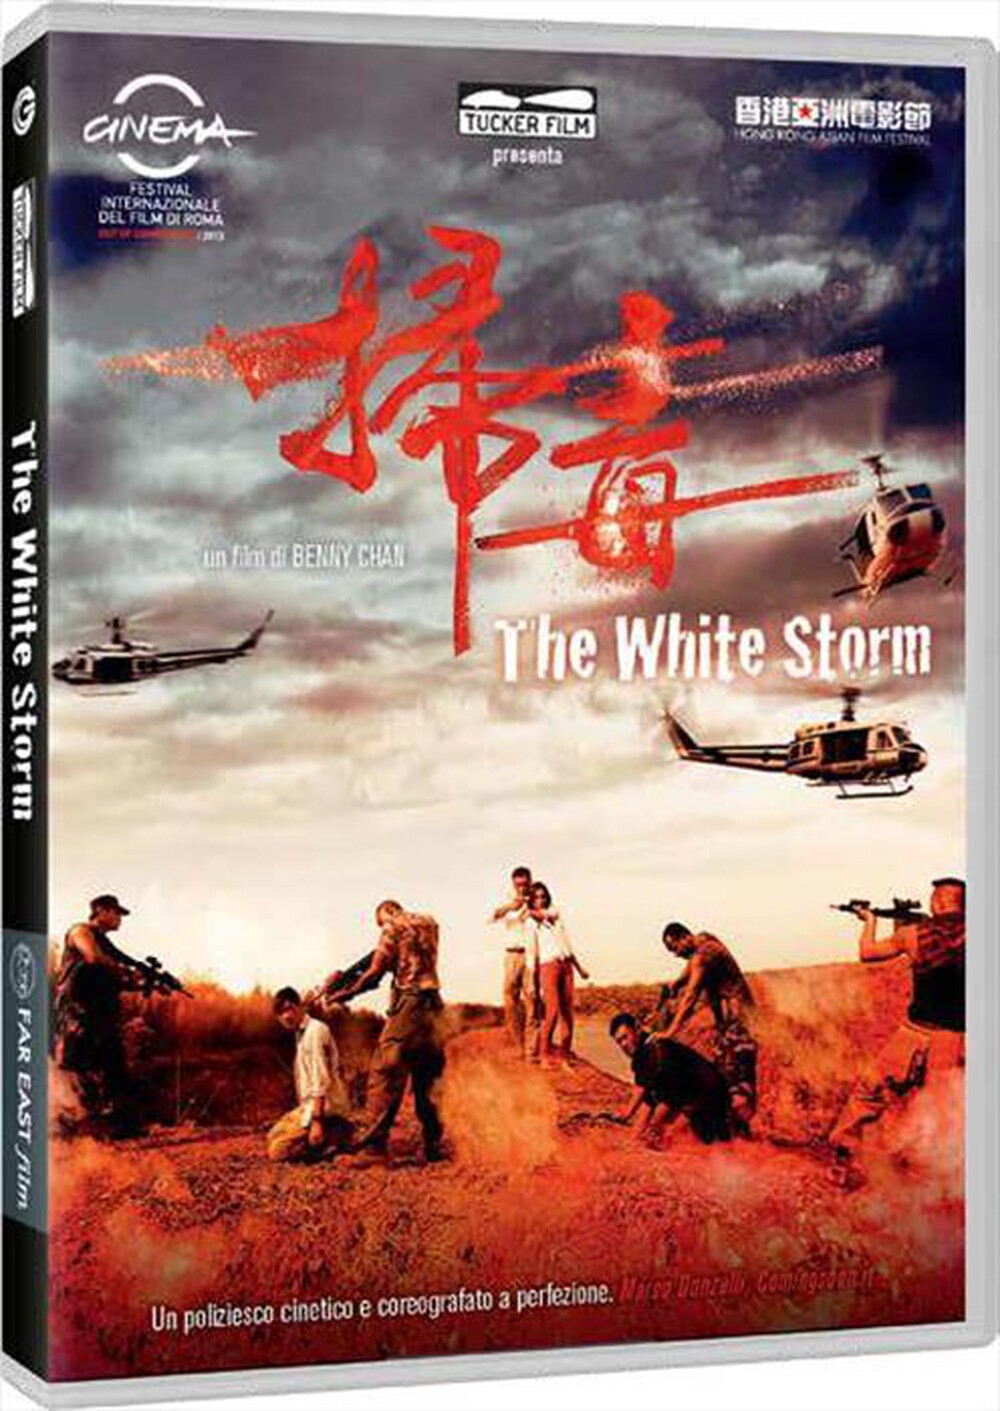 "FAR EAST FILM - White Storm (The)"